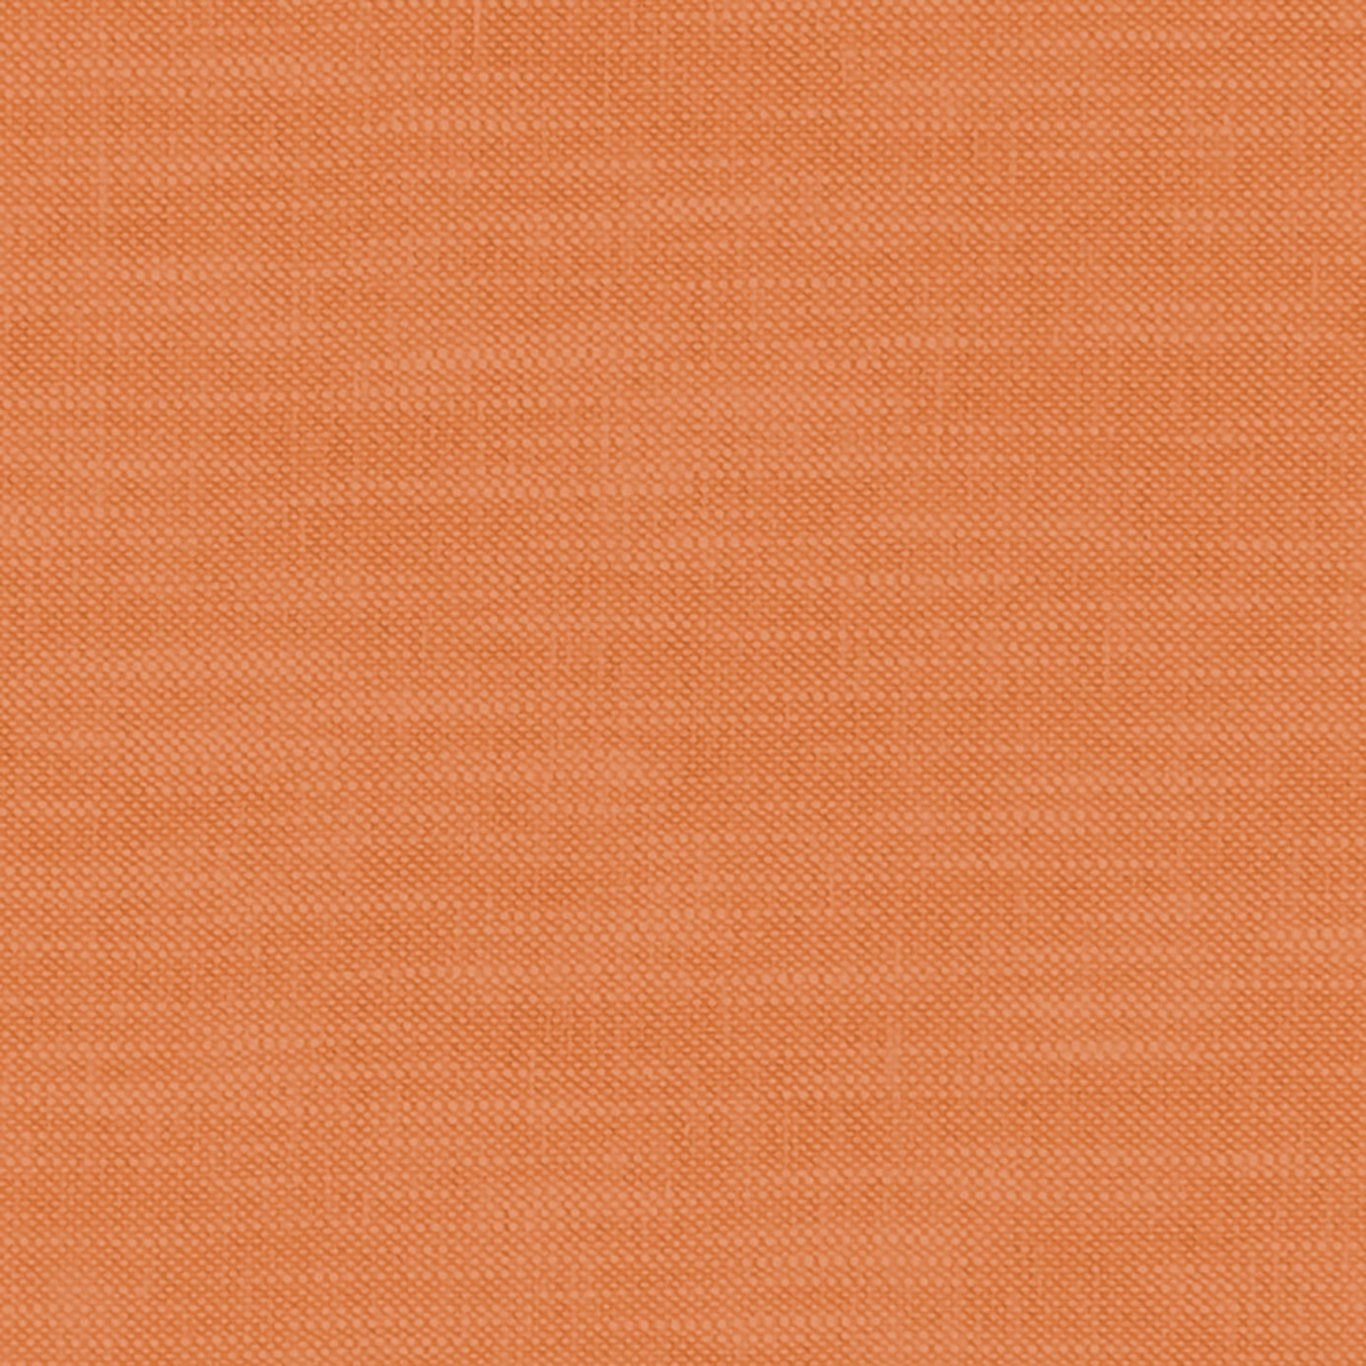 Amalfi Fabric by Clarke & Clarke - F1239/51 - Pumpkin